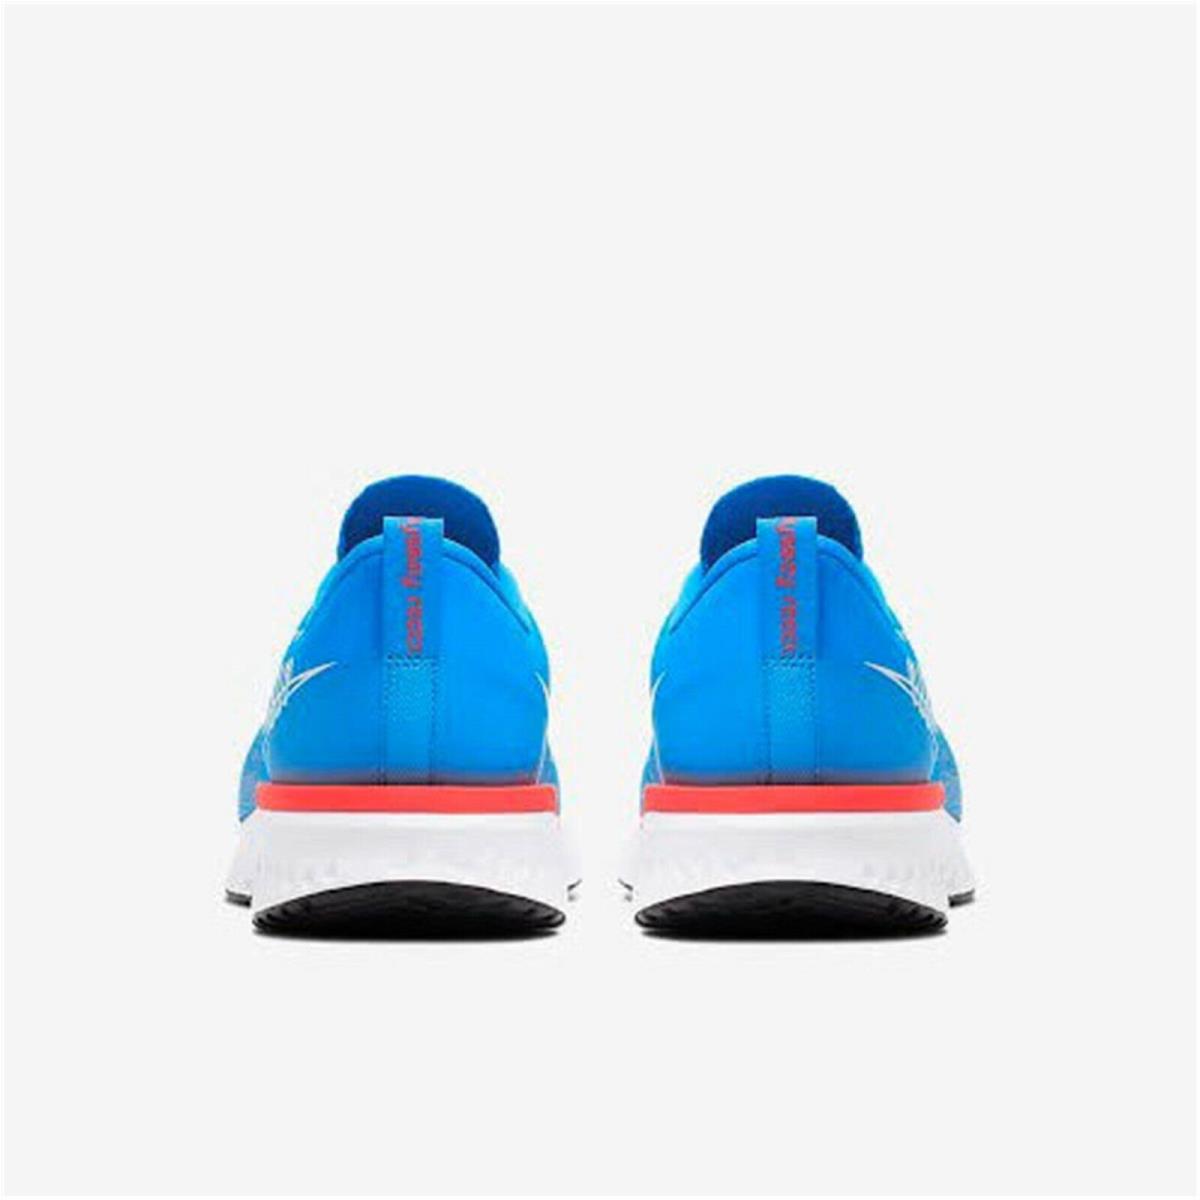 Nike shoes  - BLUE HERO / WHITE-STELLAR INDIGO , BLUE HERO / WHITE-STELLAR INDIGO Manufacturer 2